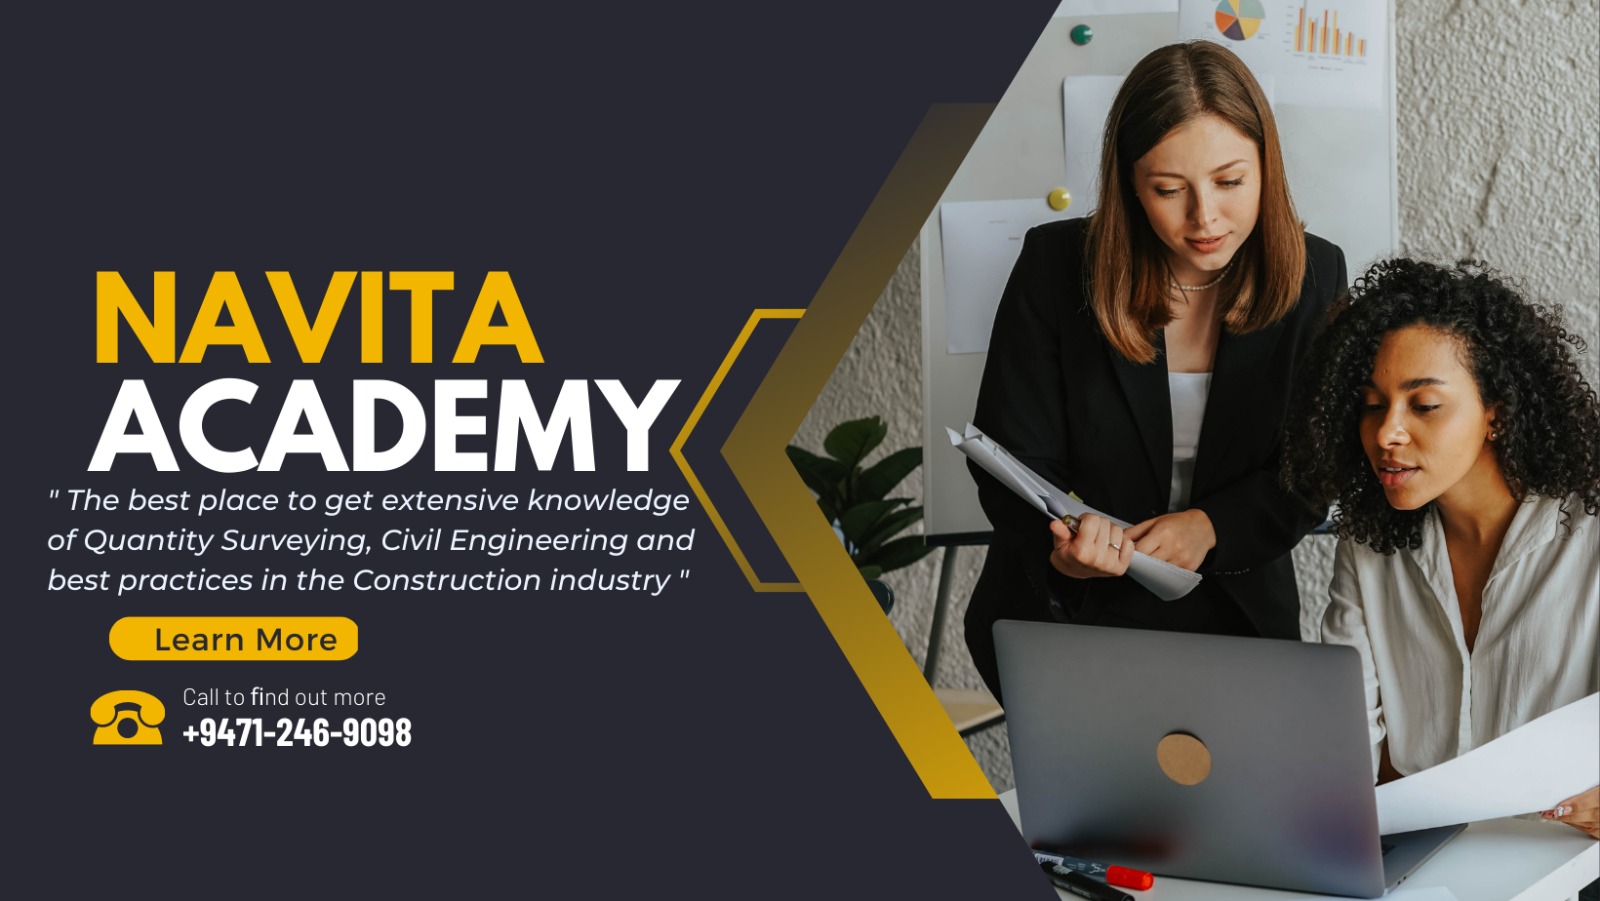 wedabima.com - Navita Academy cover